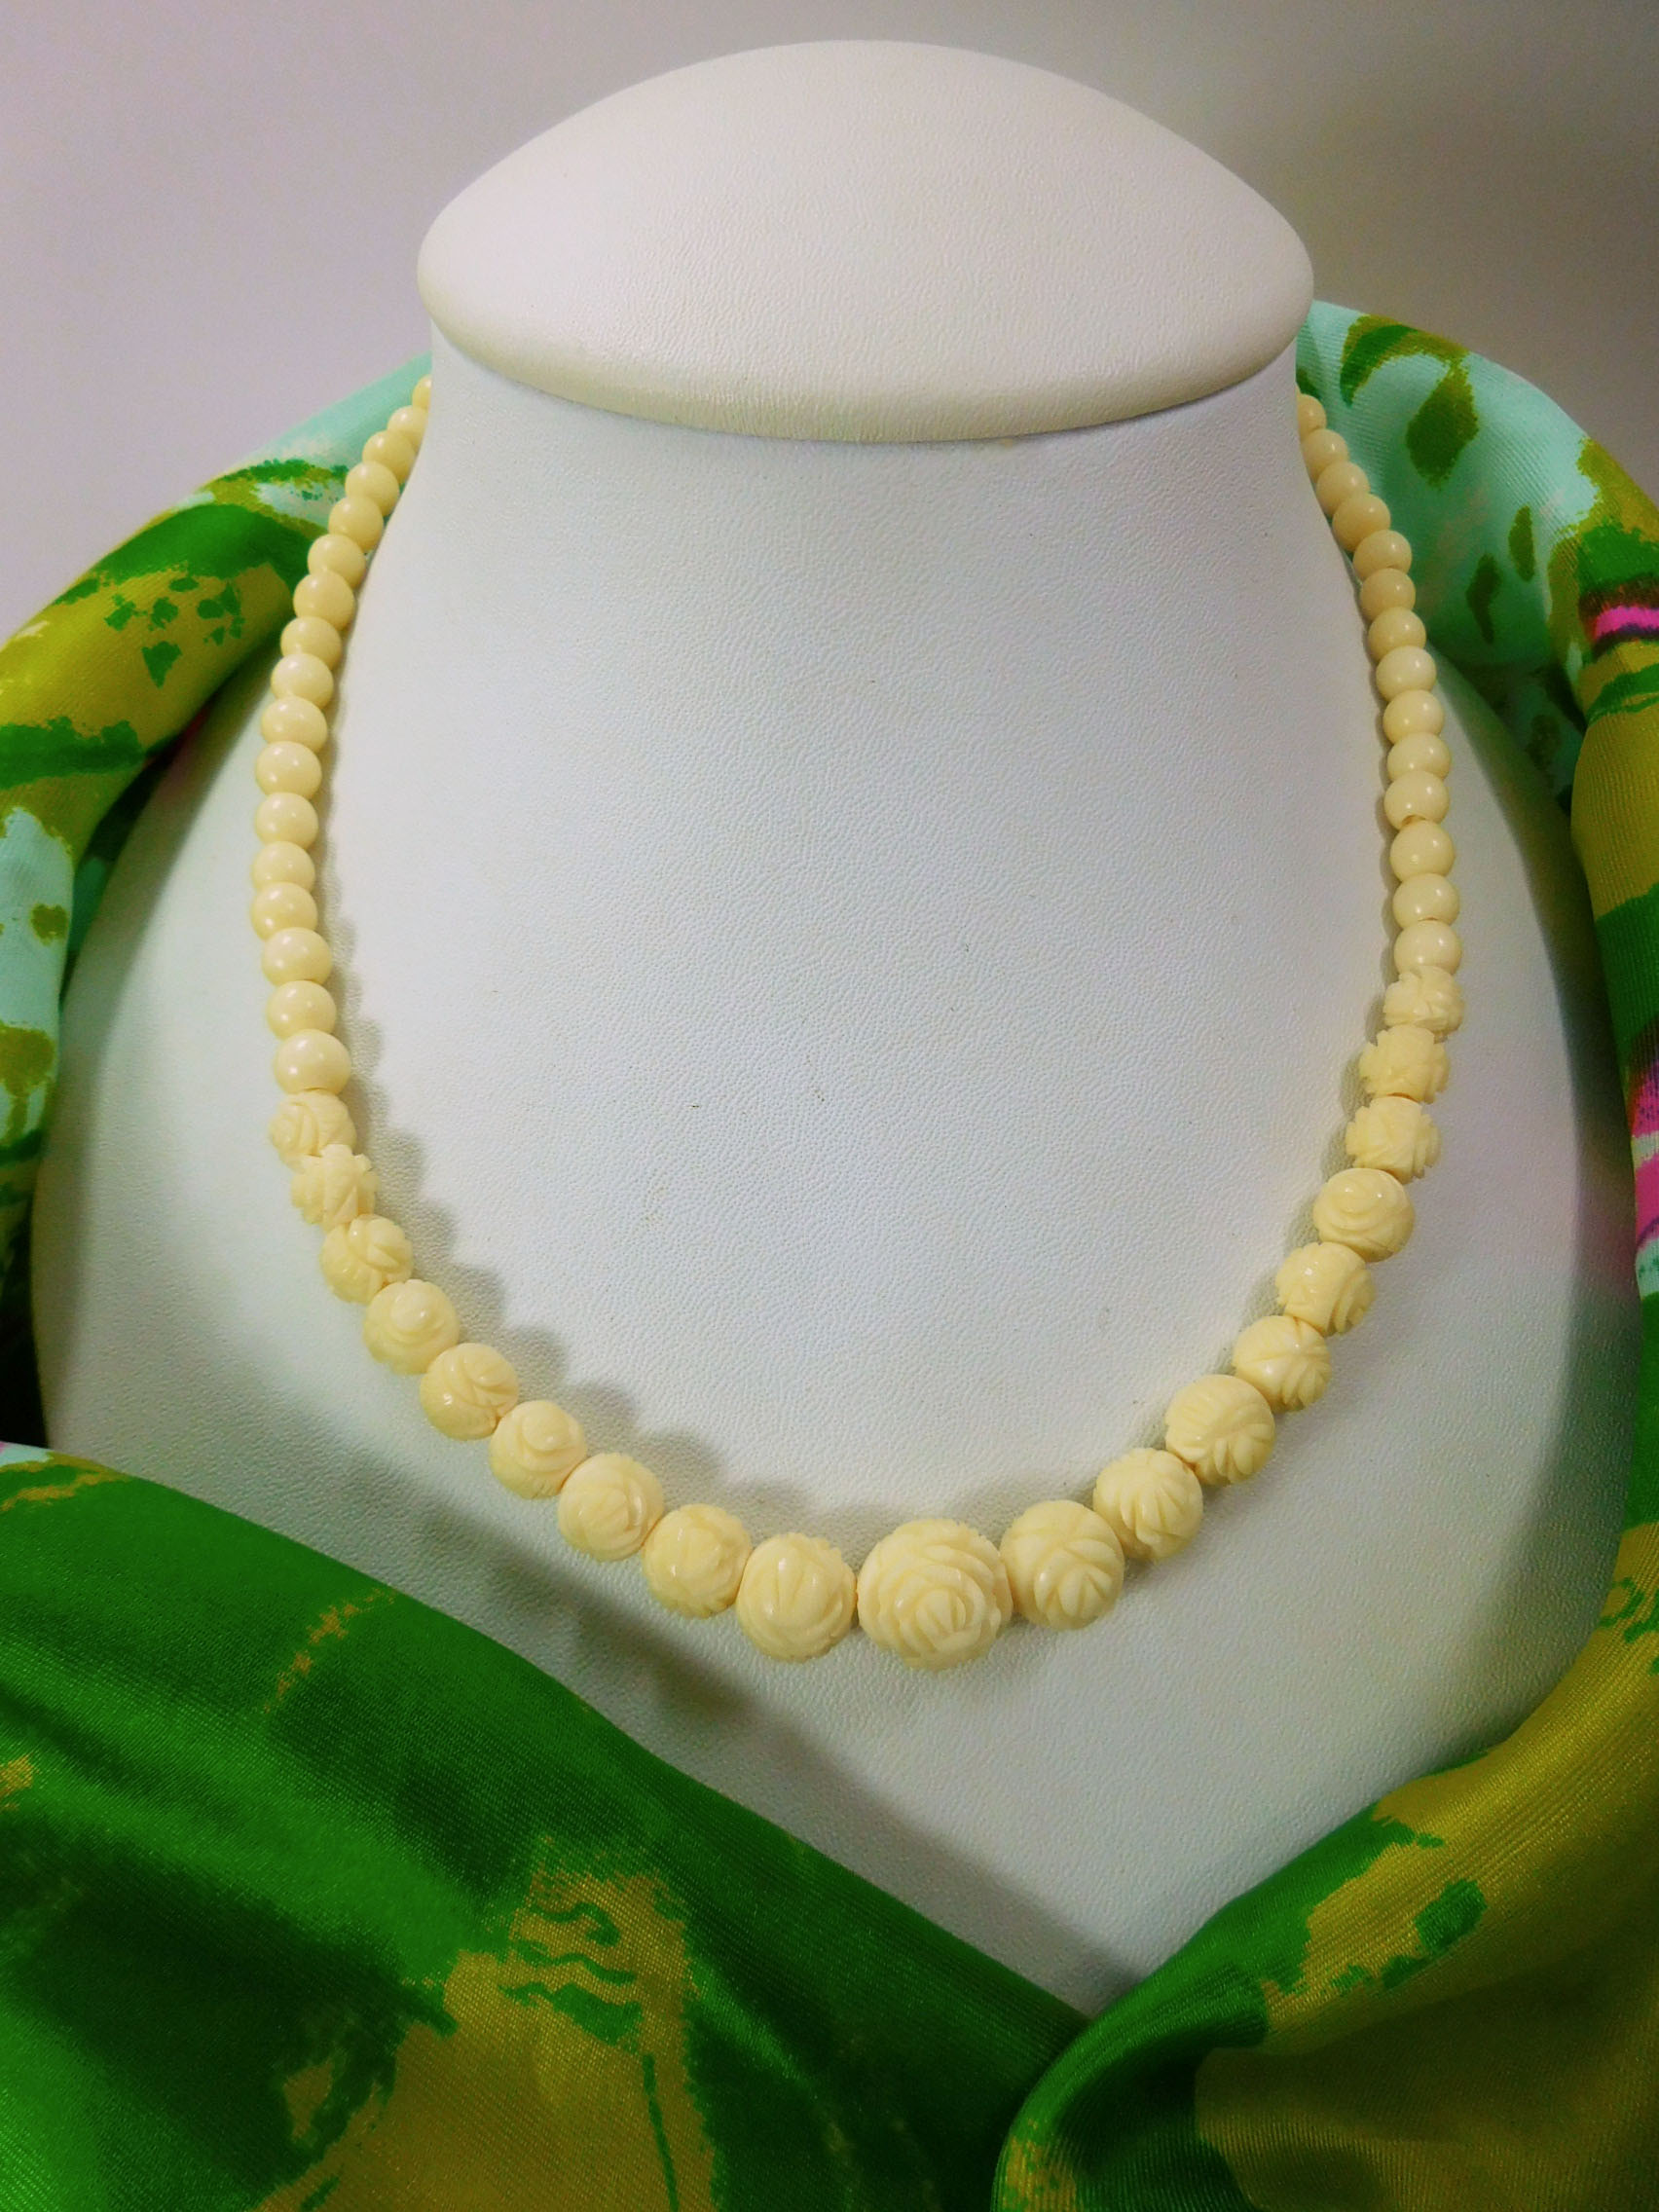 Tibetan Human Bone Bead Necklace with Coral & Turquoise - Michael Backman  Ltd